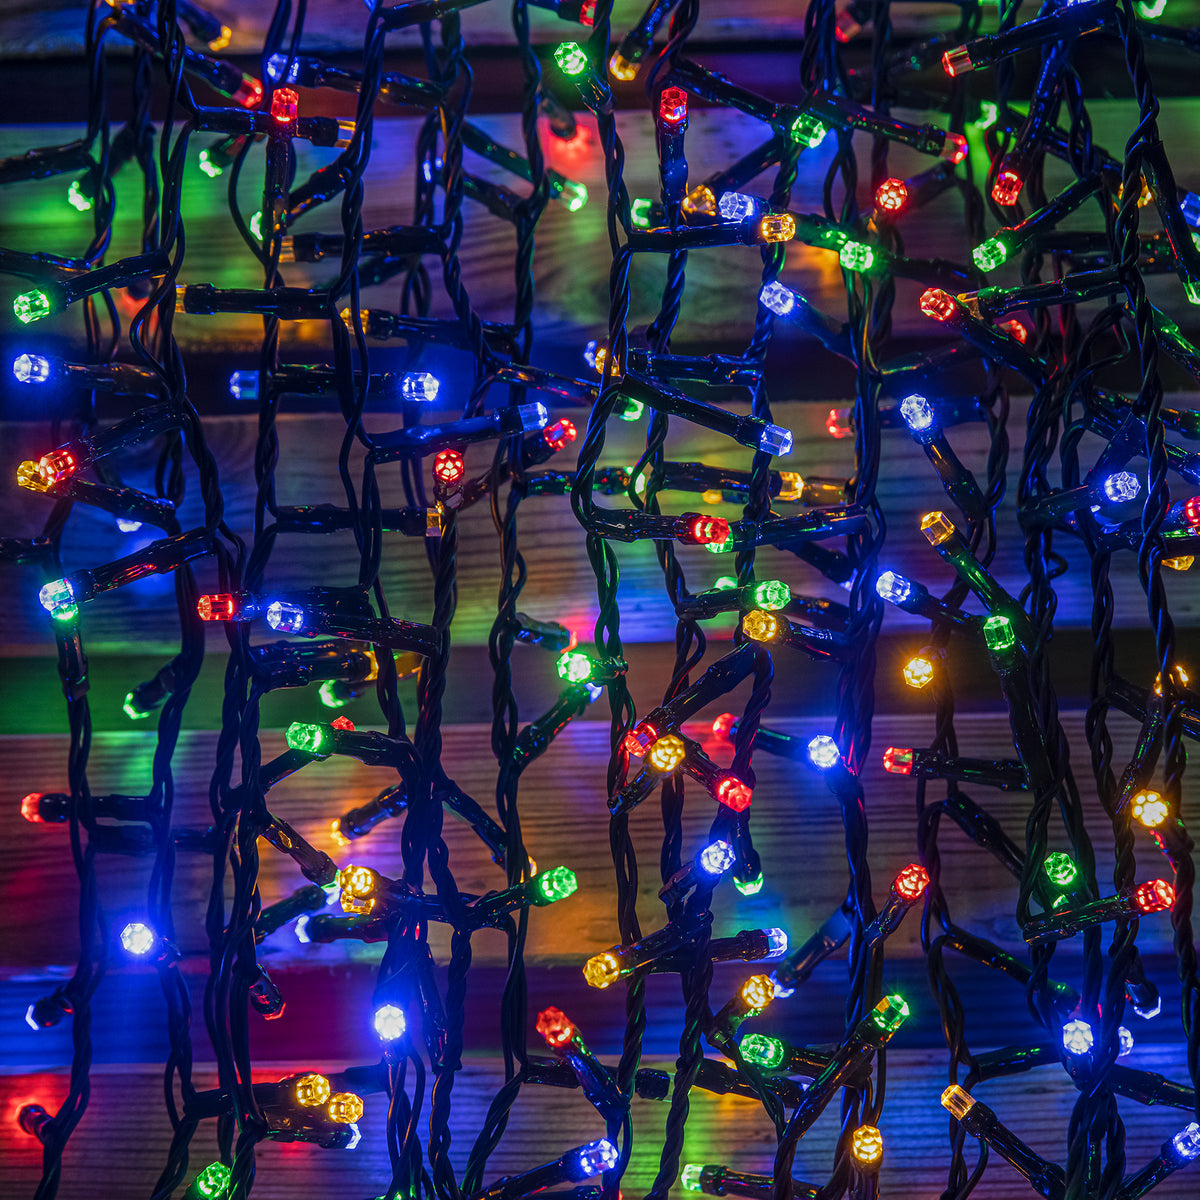 Multi-Coloured LED Multi-Function Christmas Compact Lights - 750 &amp; 2000